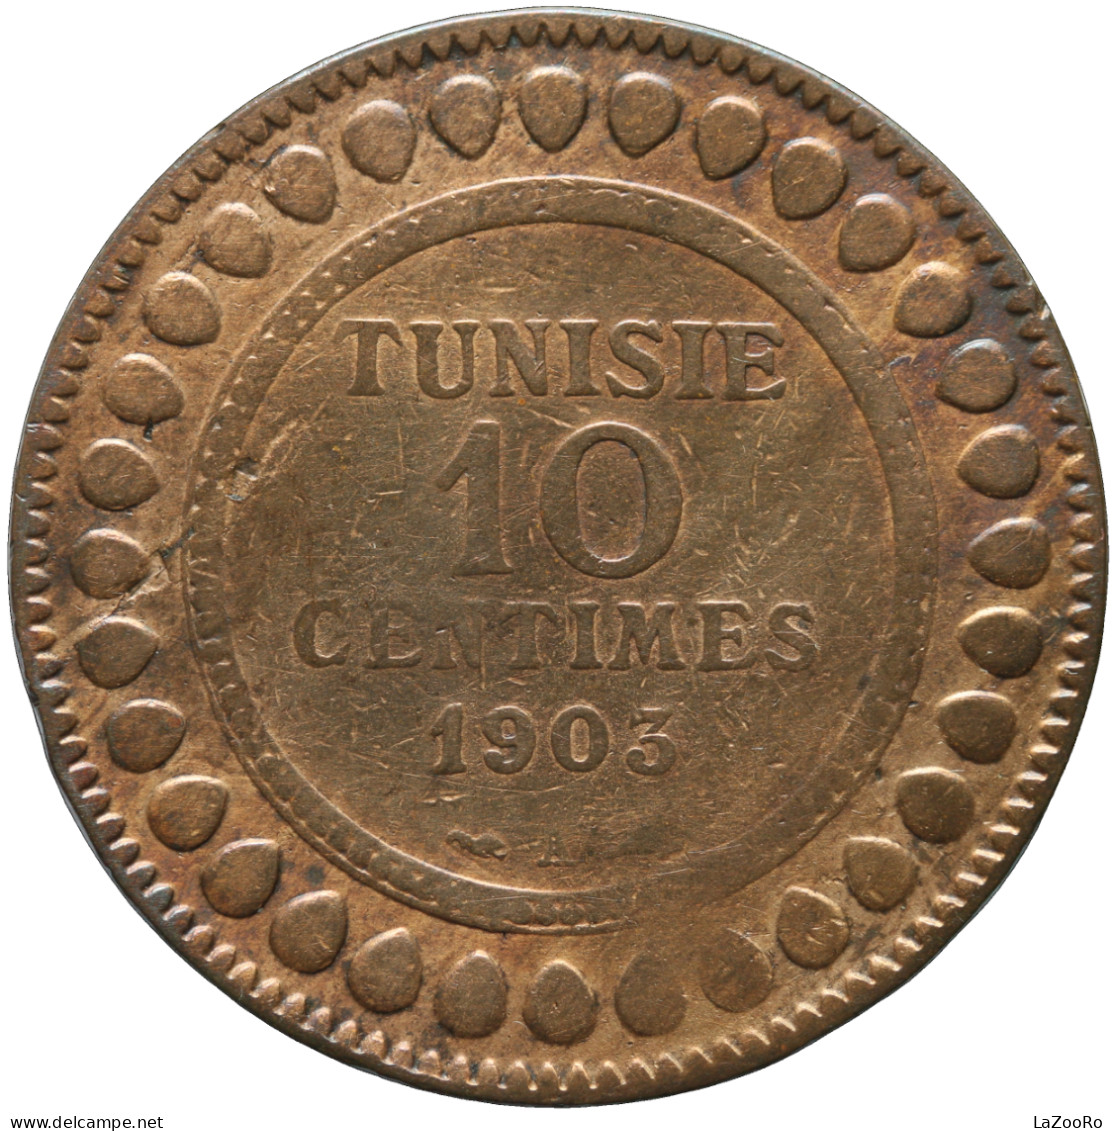 LaZooRo: Tunisia 10 Centimes 1903 F / VF Scarce - Tunisia